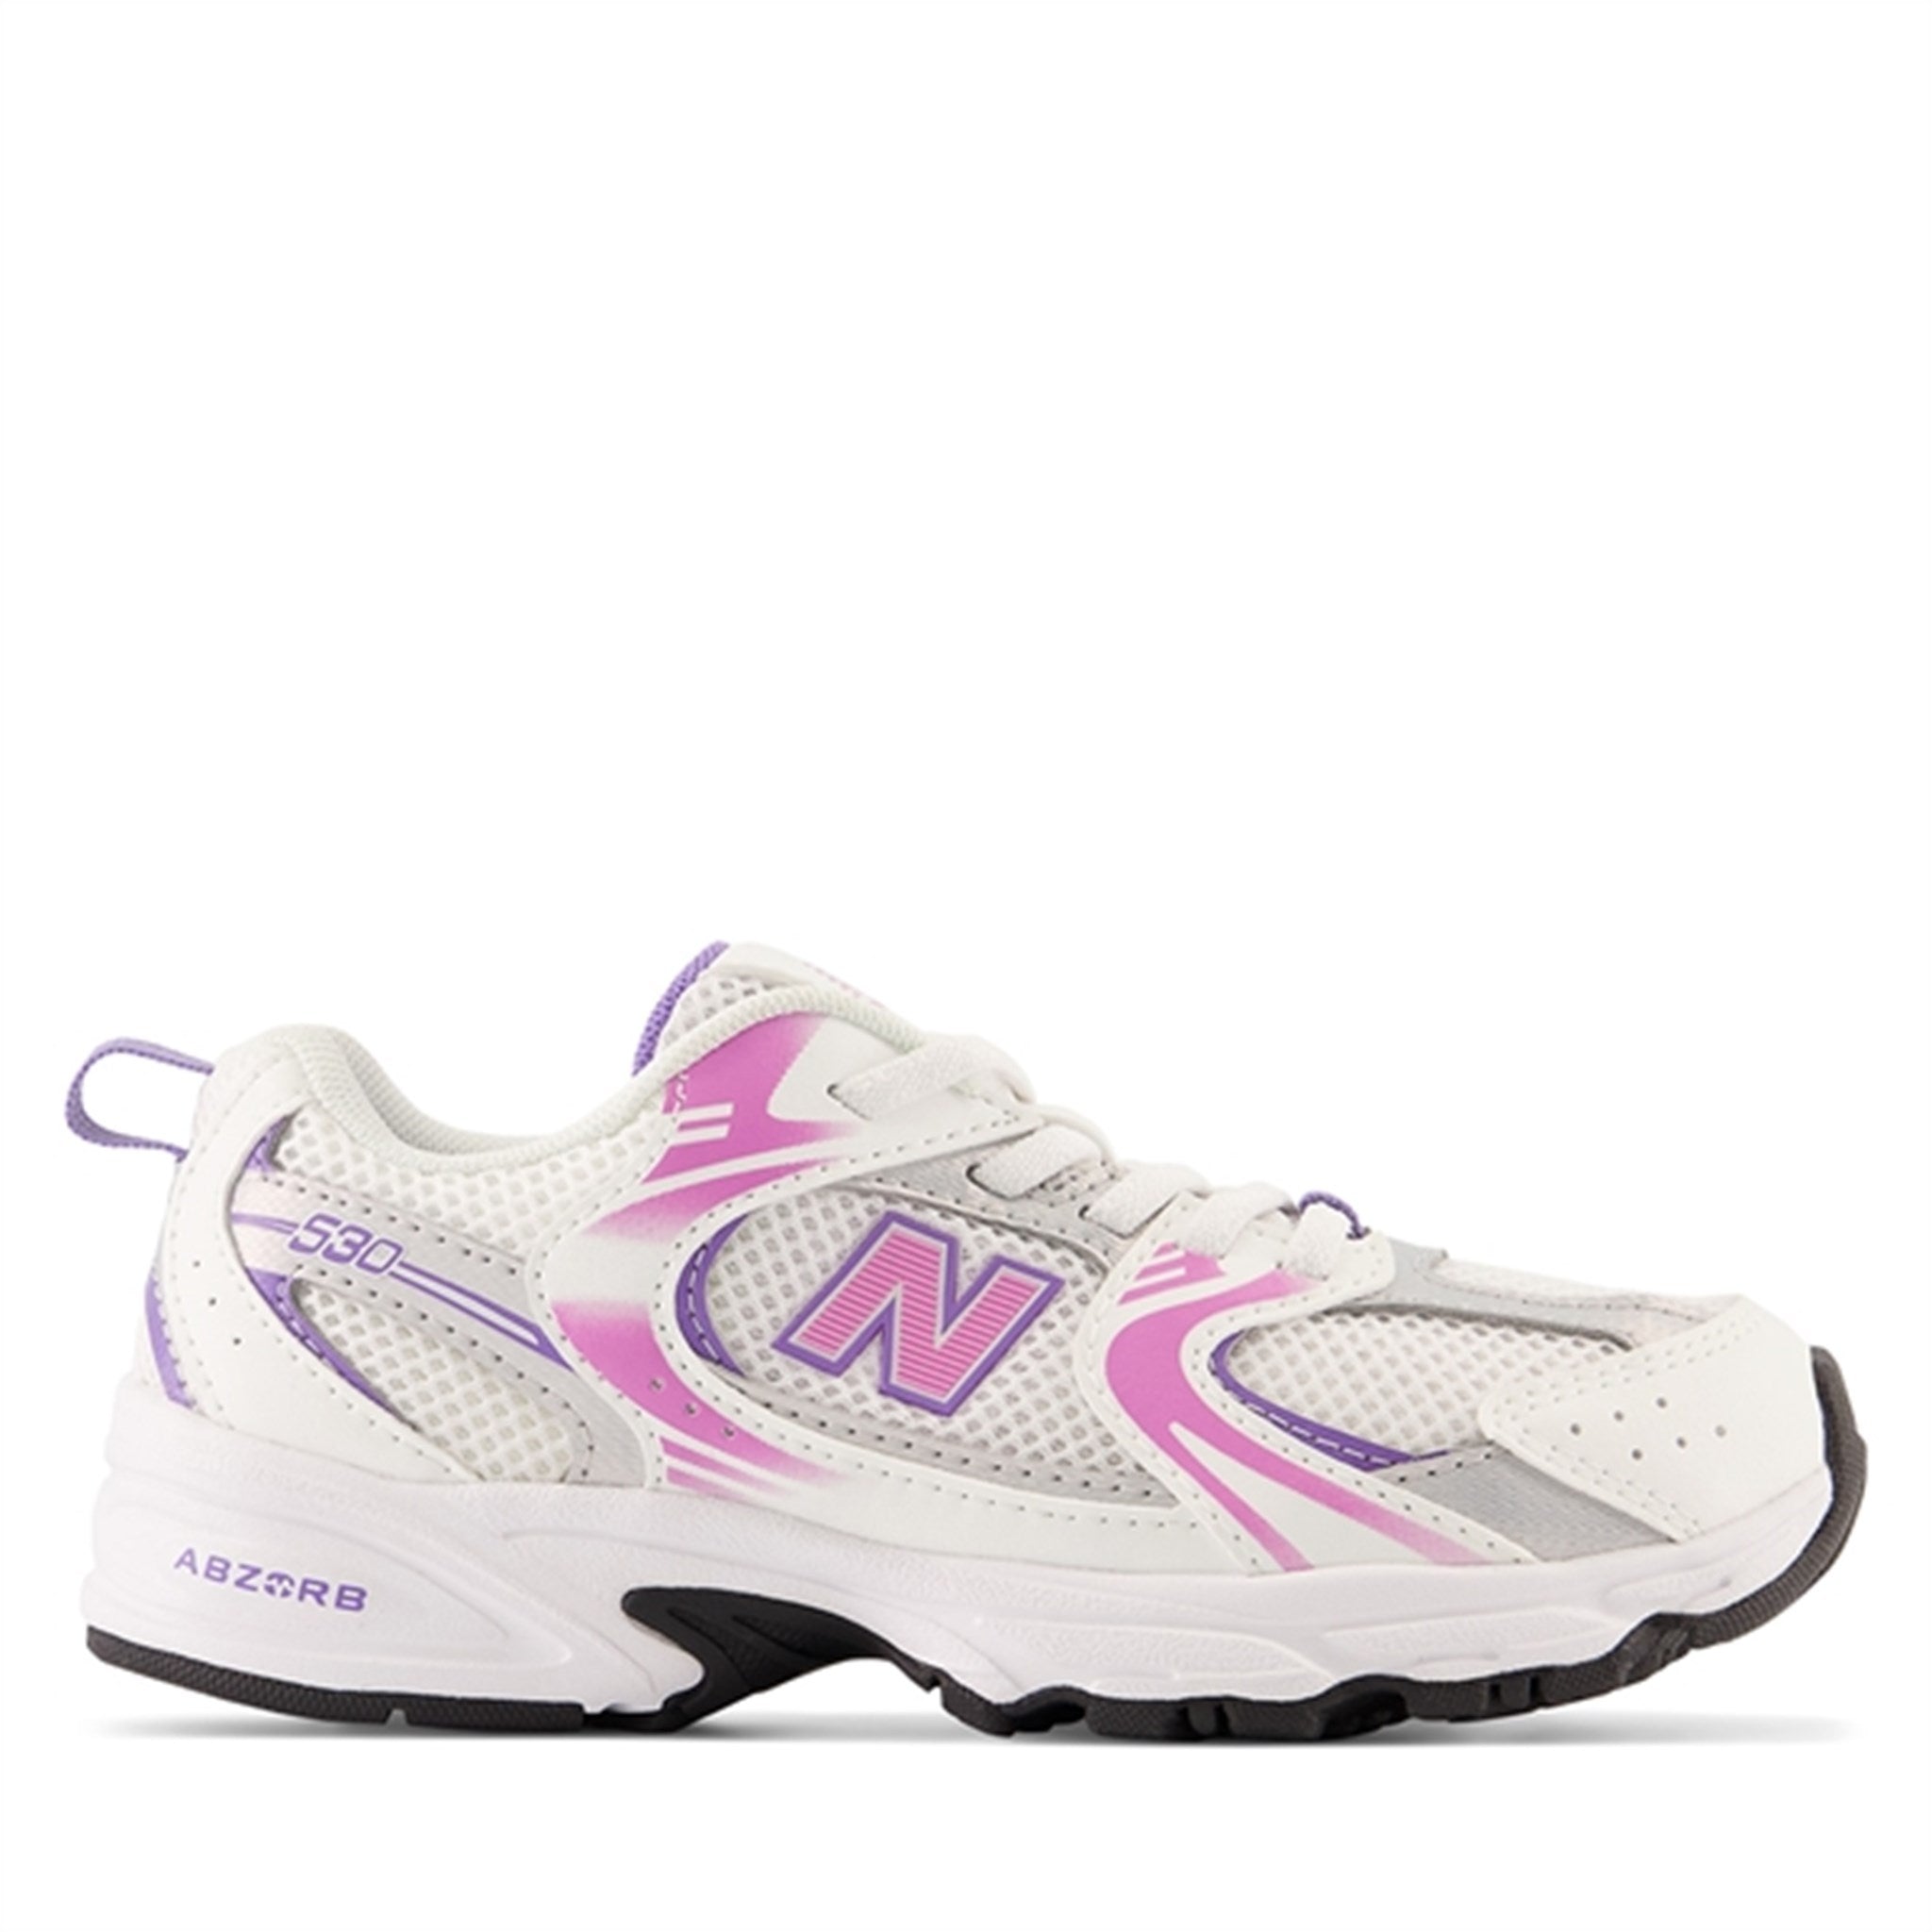 New Balance 530 White/Rasberry Sneakers